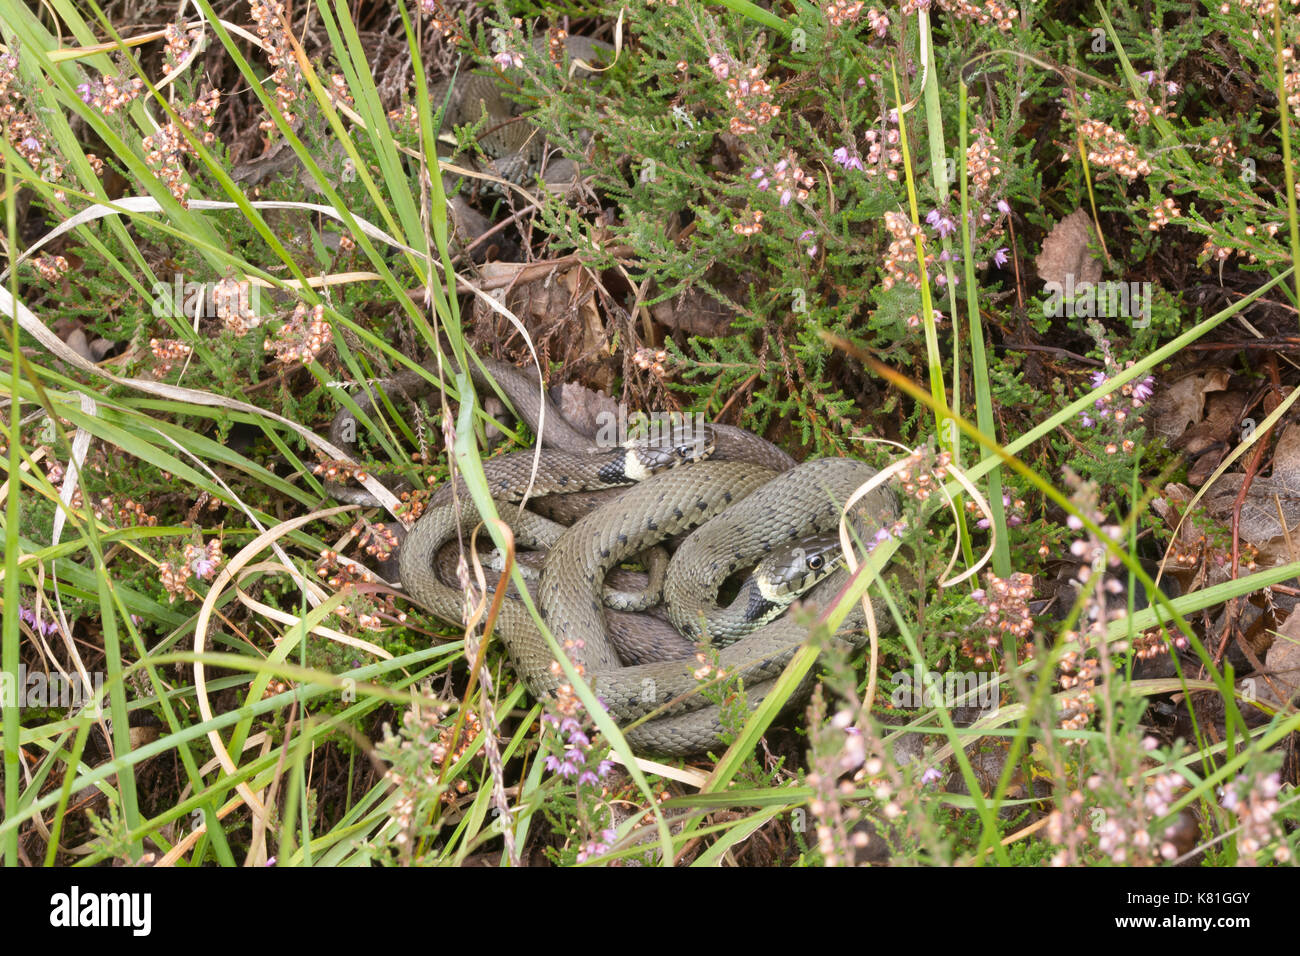 Three barred grass snakes (Natrix helvetica) basking in heathland, UK Stock Photo